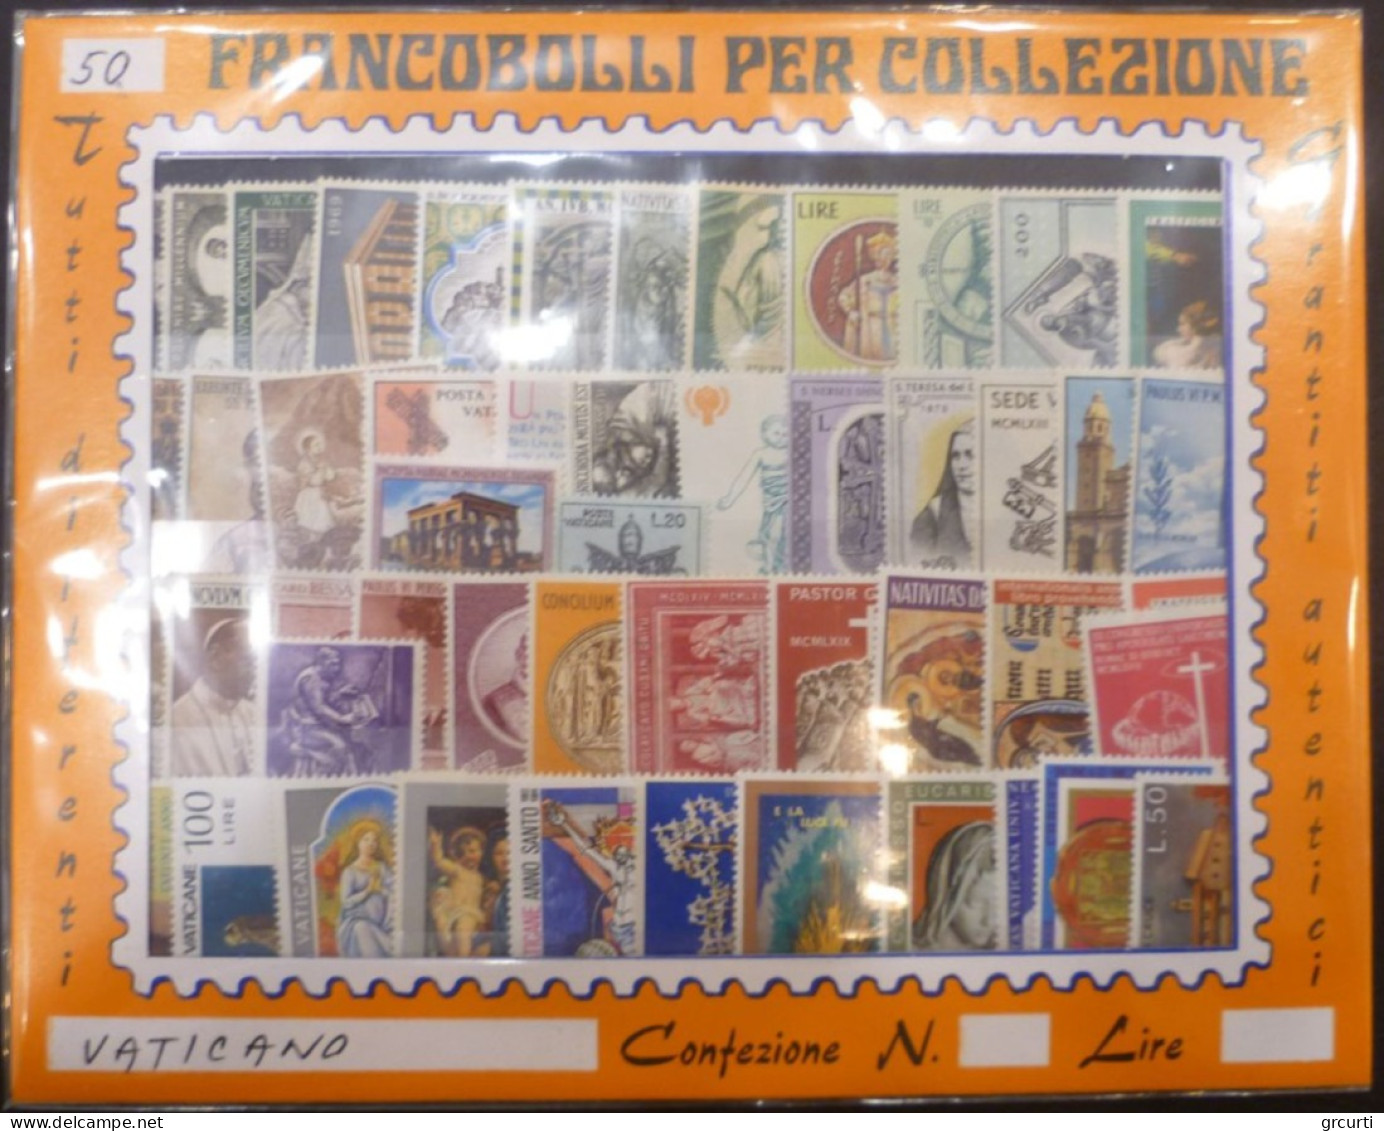 50 Francobolli Vaticano Differenti - Lots & Kiloware (mixtures) - Max. 999 Stamps